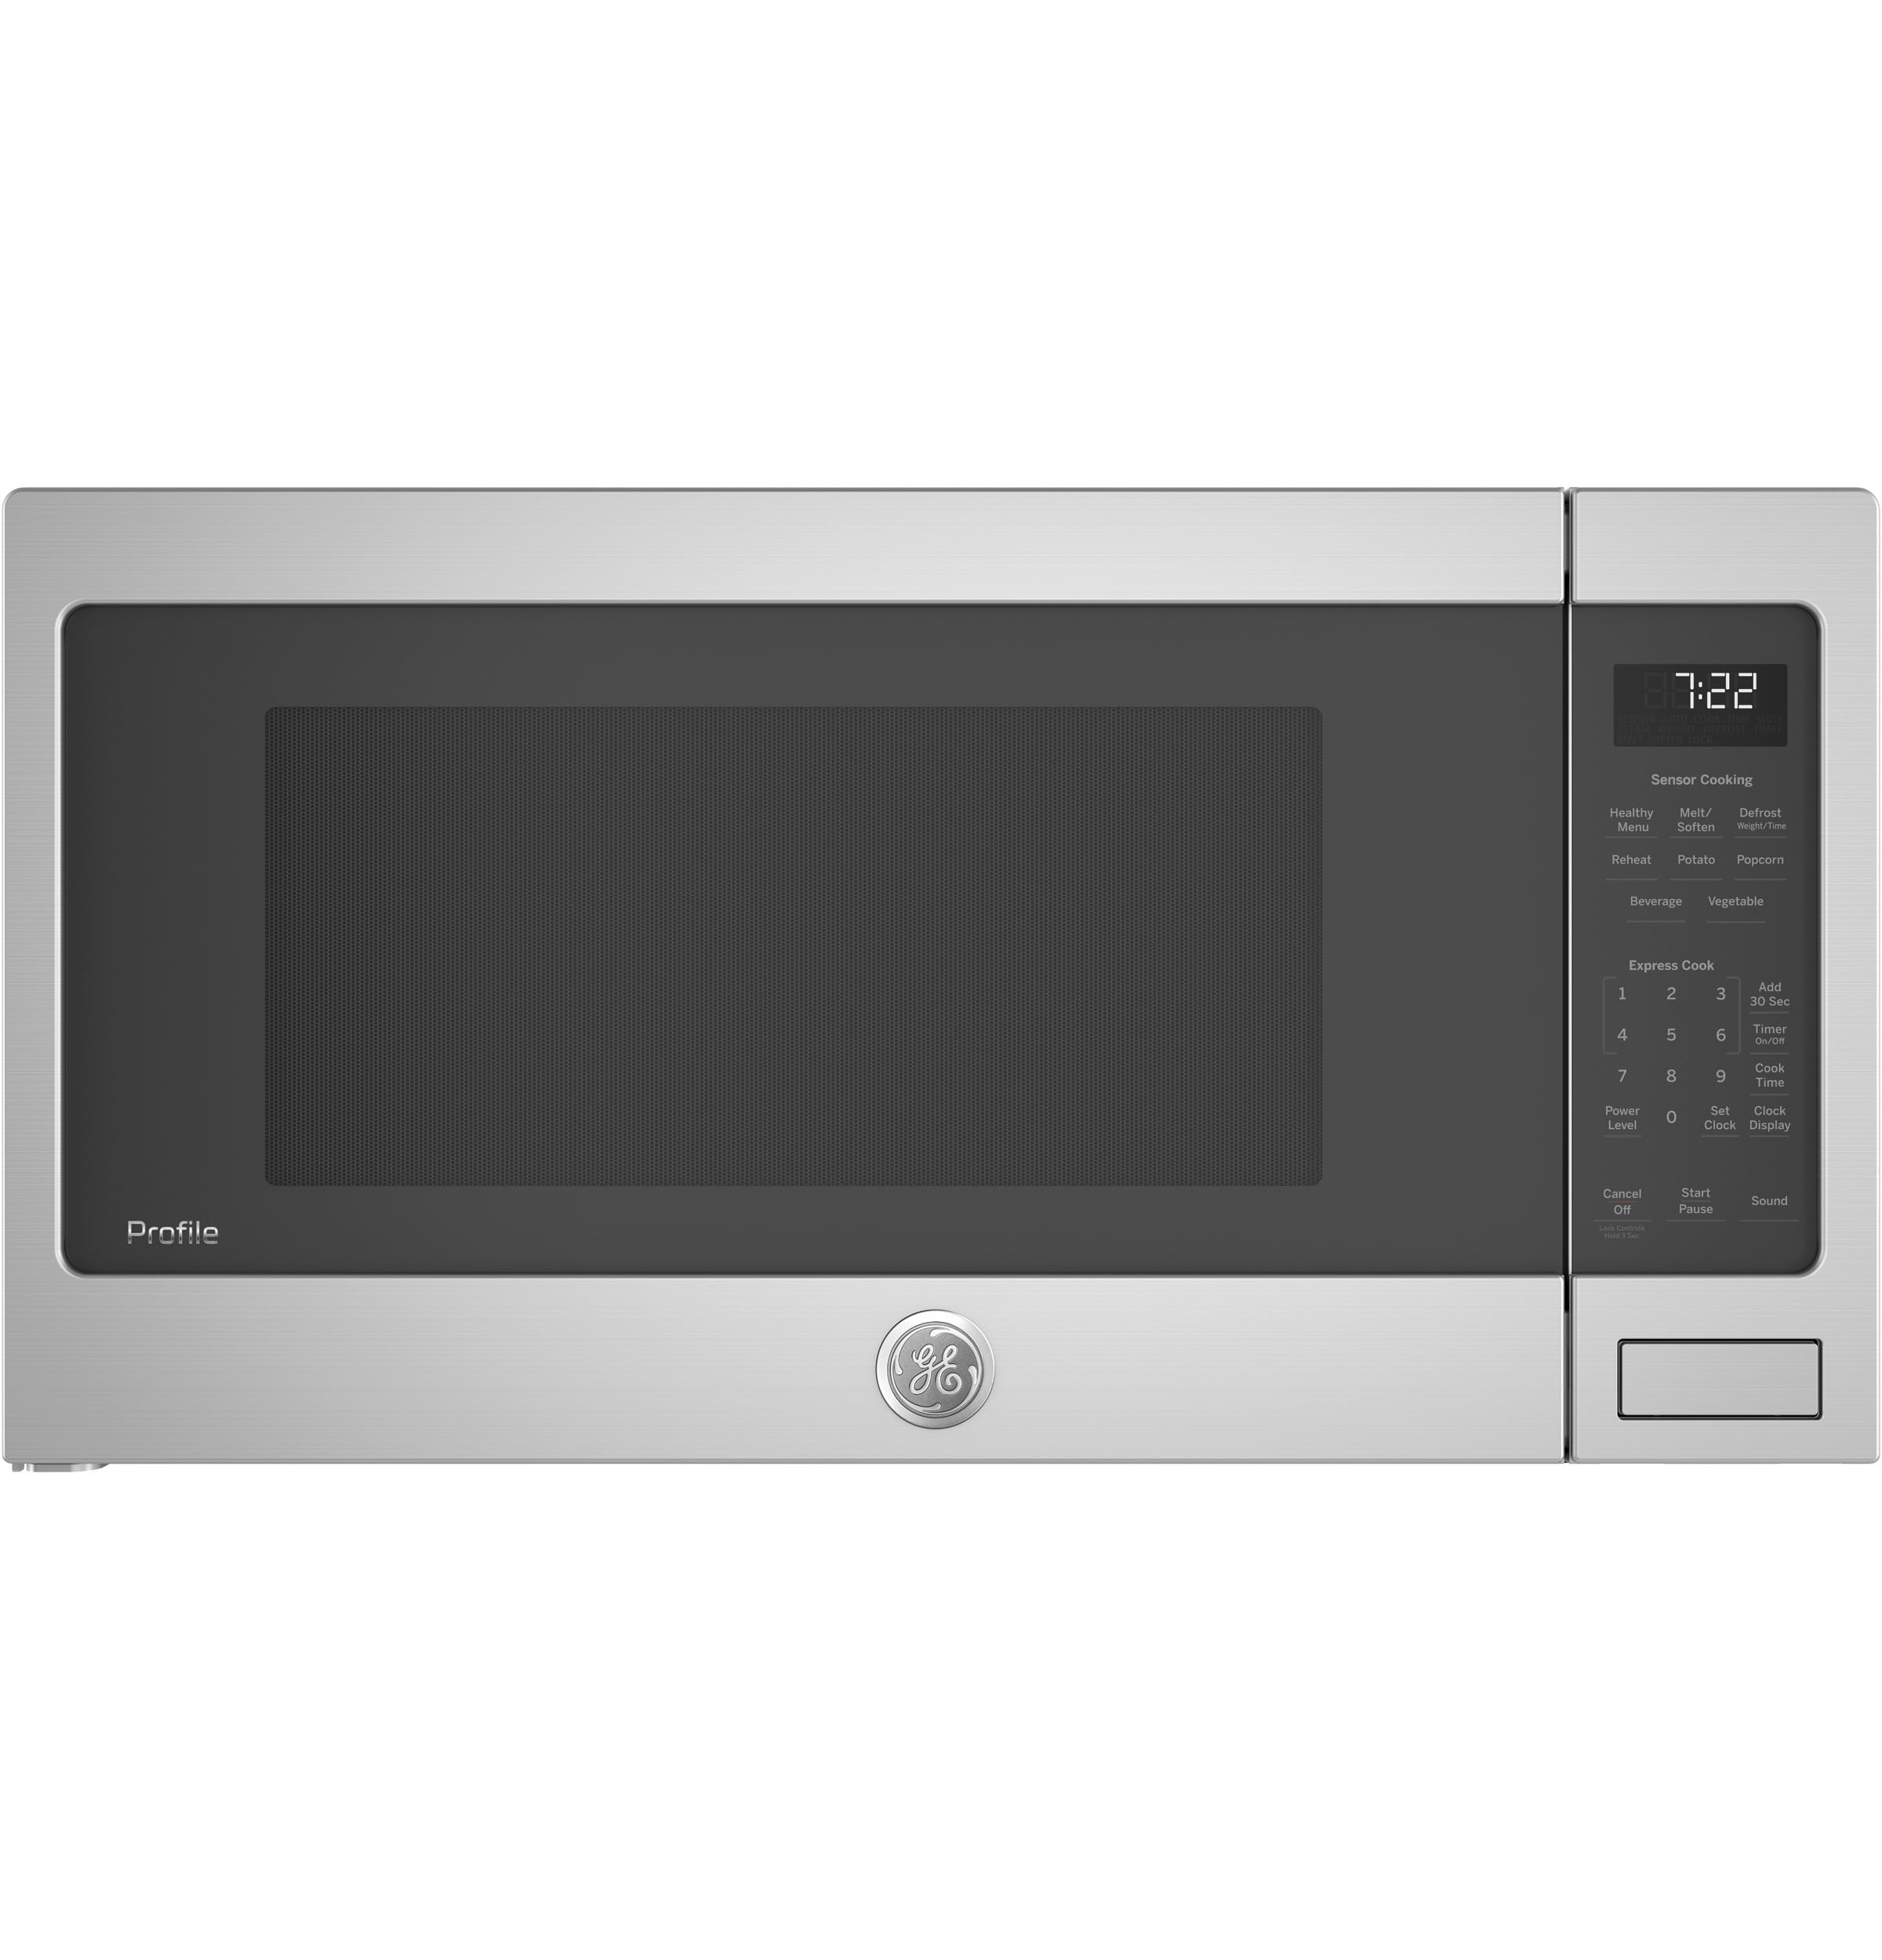 Toshiba Microwaves at Lowes.com